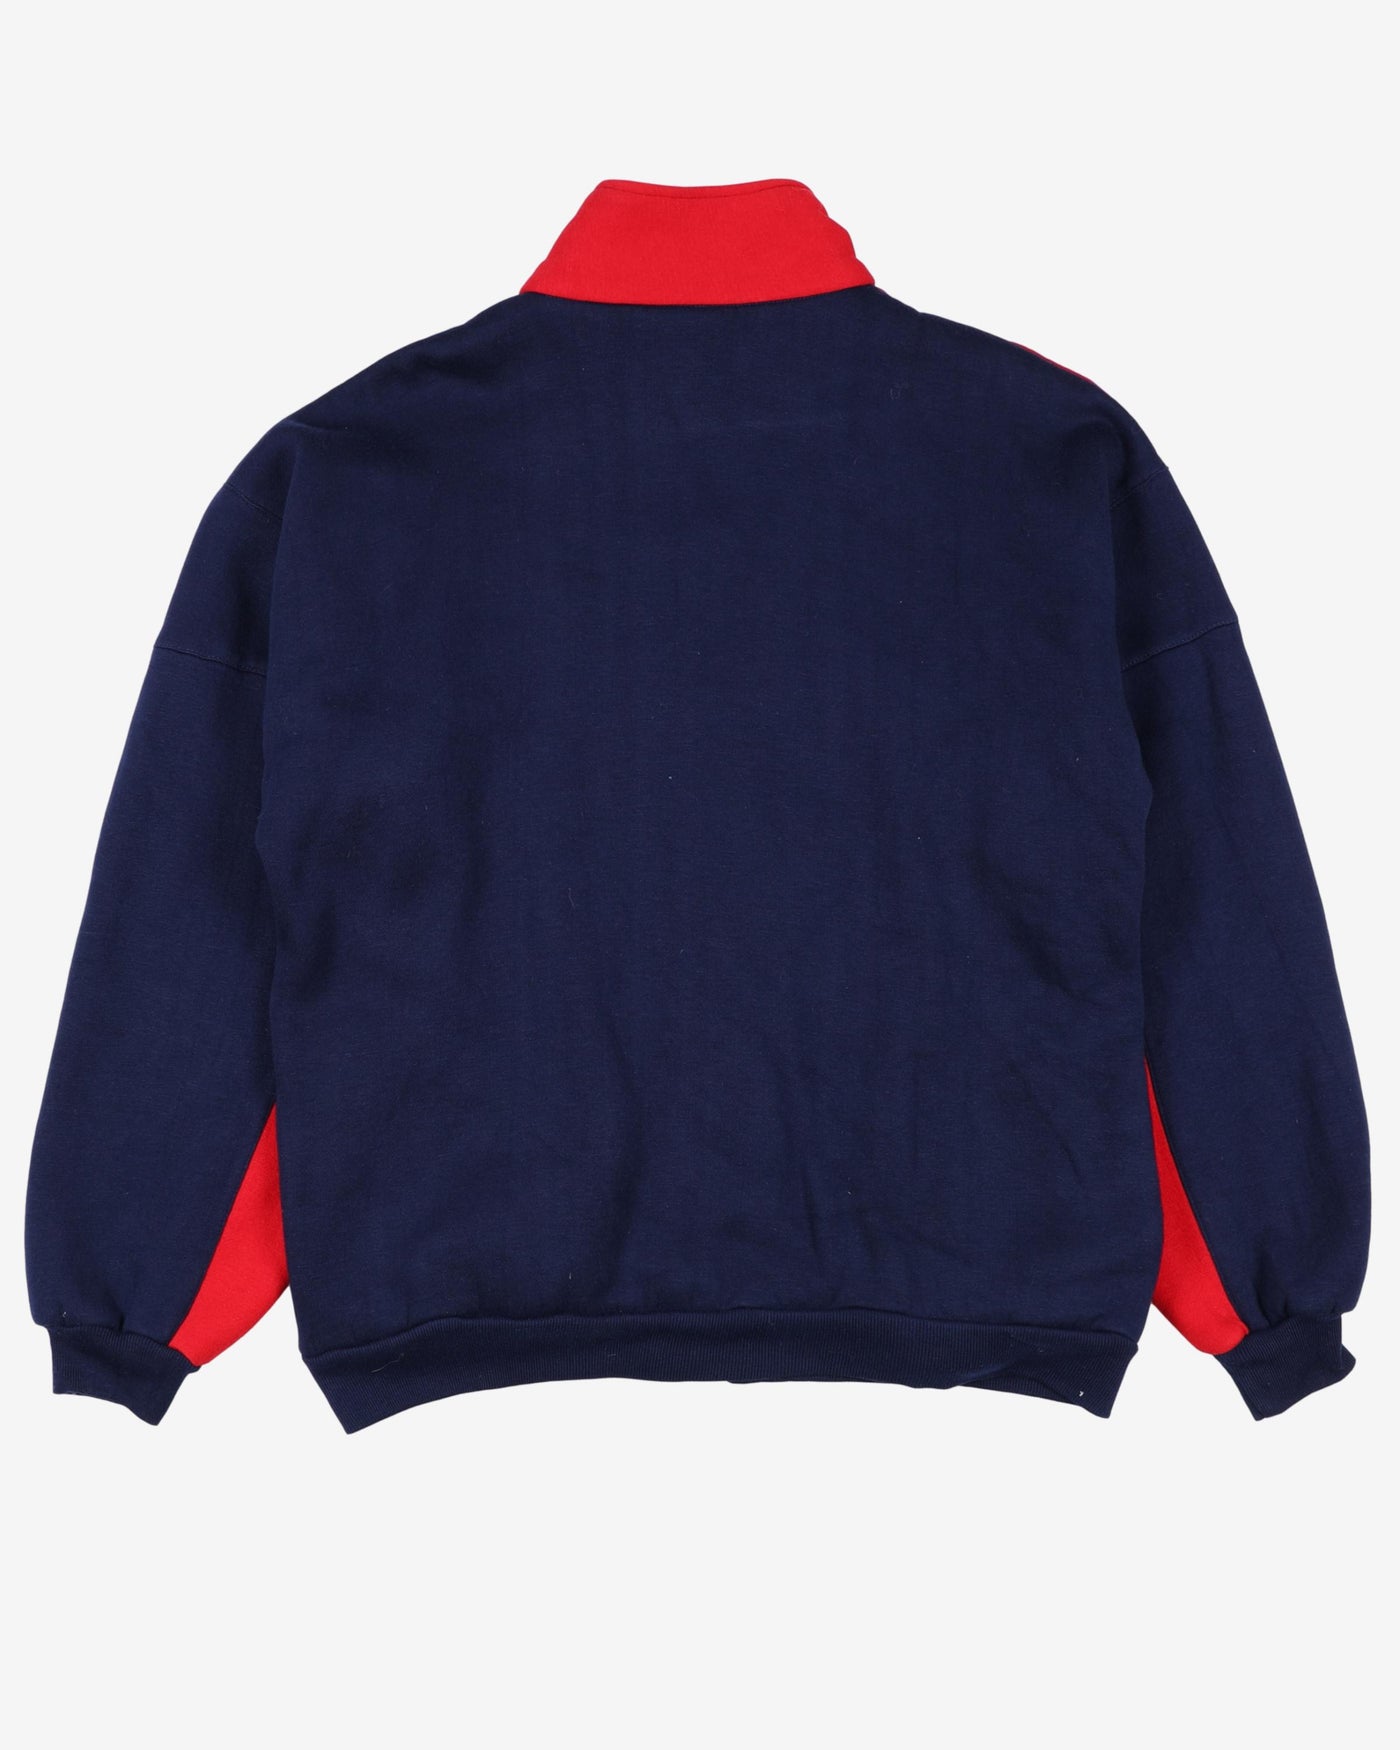 Vintage court club blue red striped sweatshirt - xl